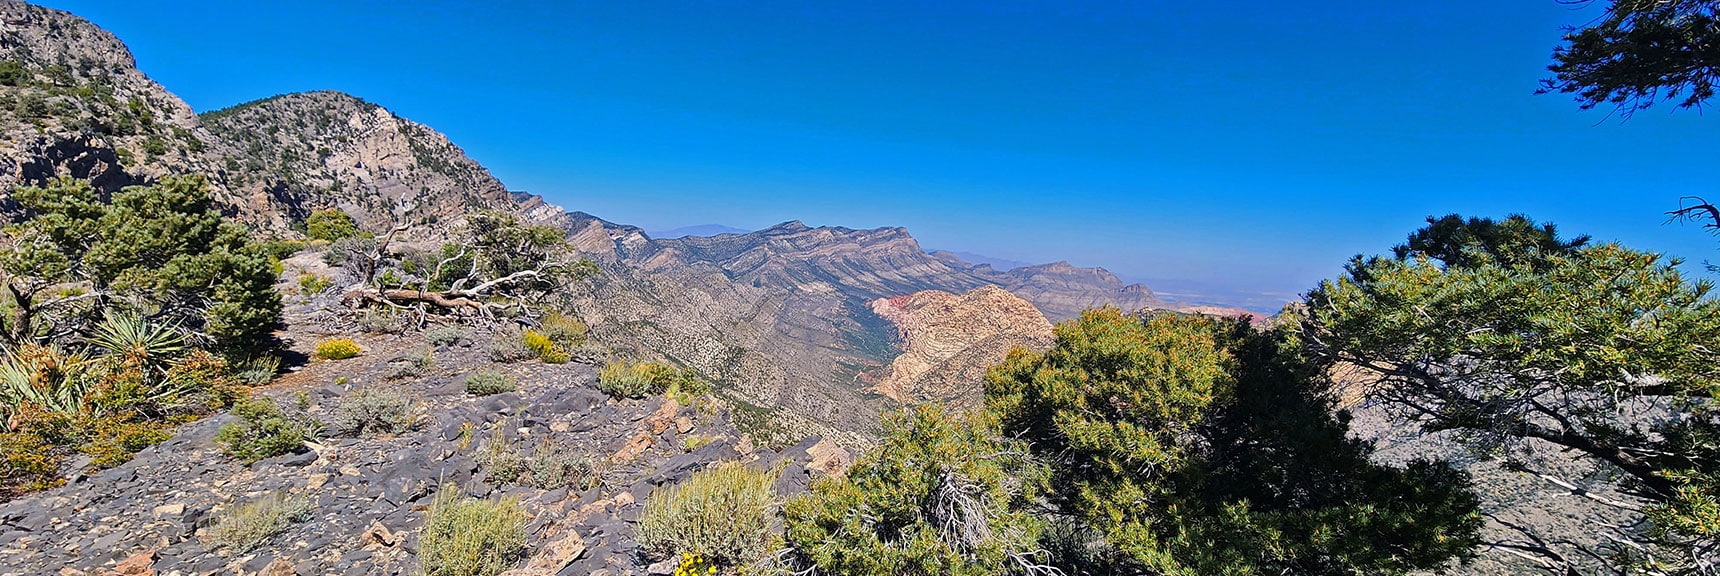 Crescent-Shaped La Madre Cliffs, White Rock Mt. Below. | Red Rock Summit Loop | Wilson Ridge | Lovell Canyon, Nevada